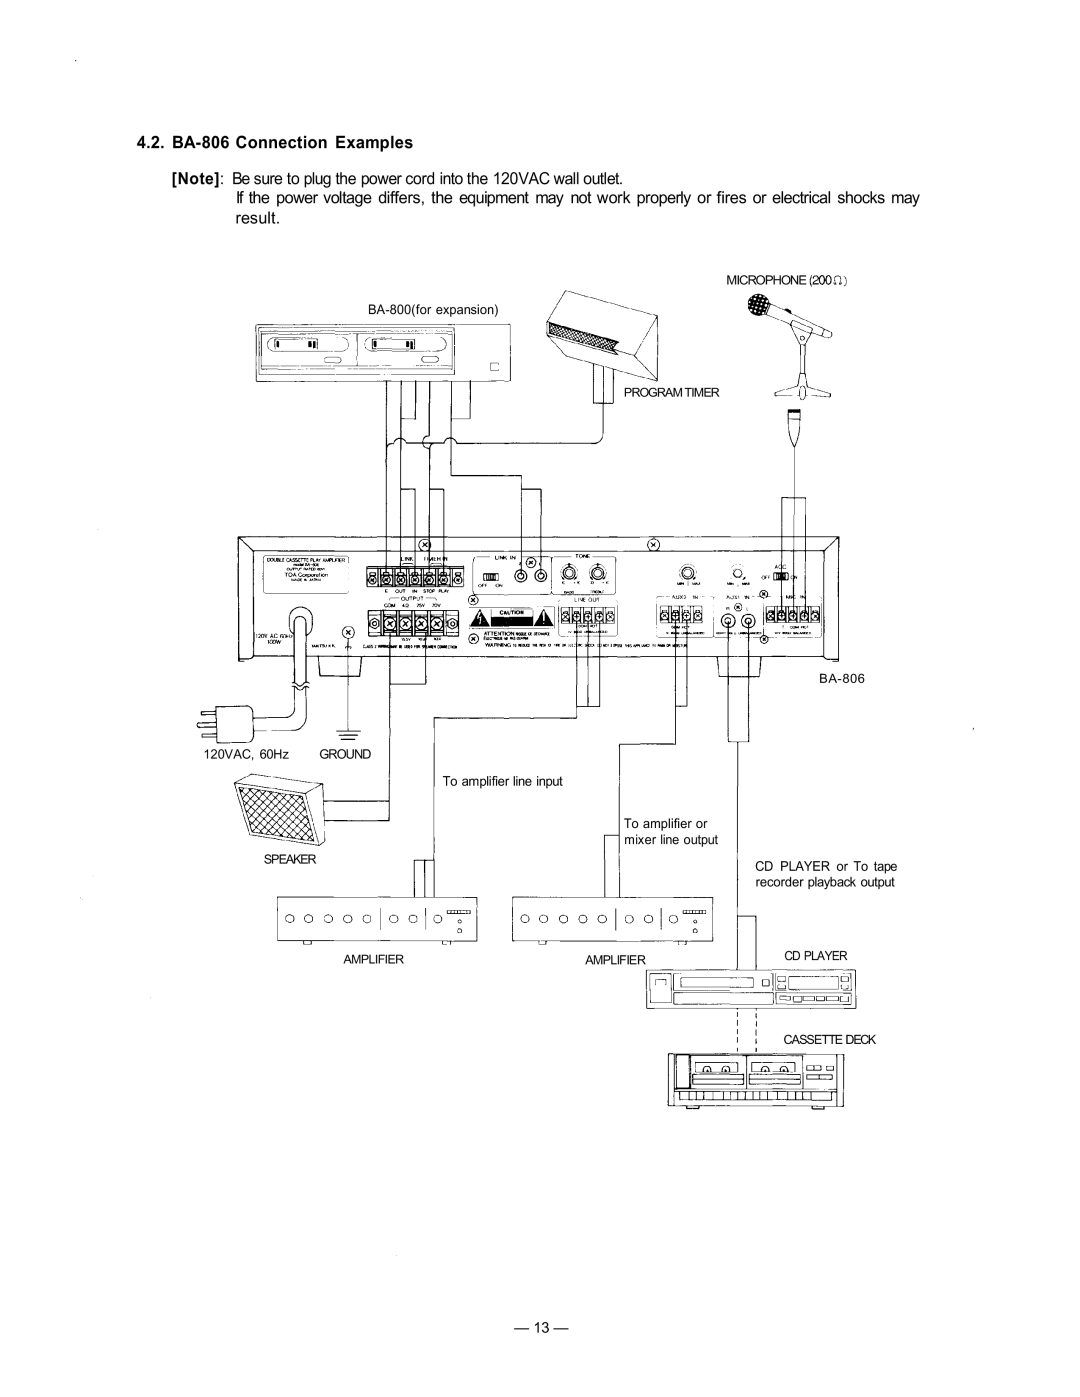 TOA Electronics BA-800 manual 4.2.BA-806Connection Examples 